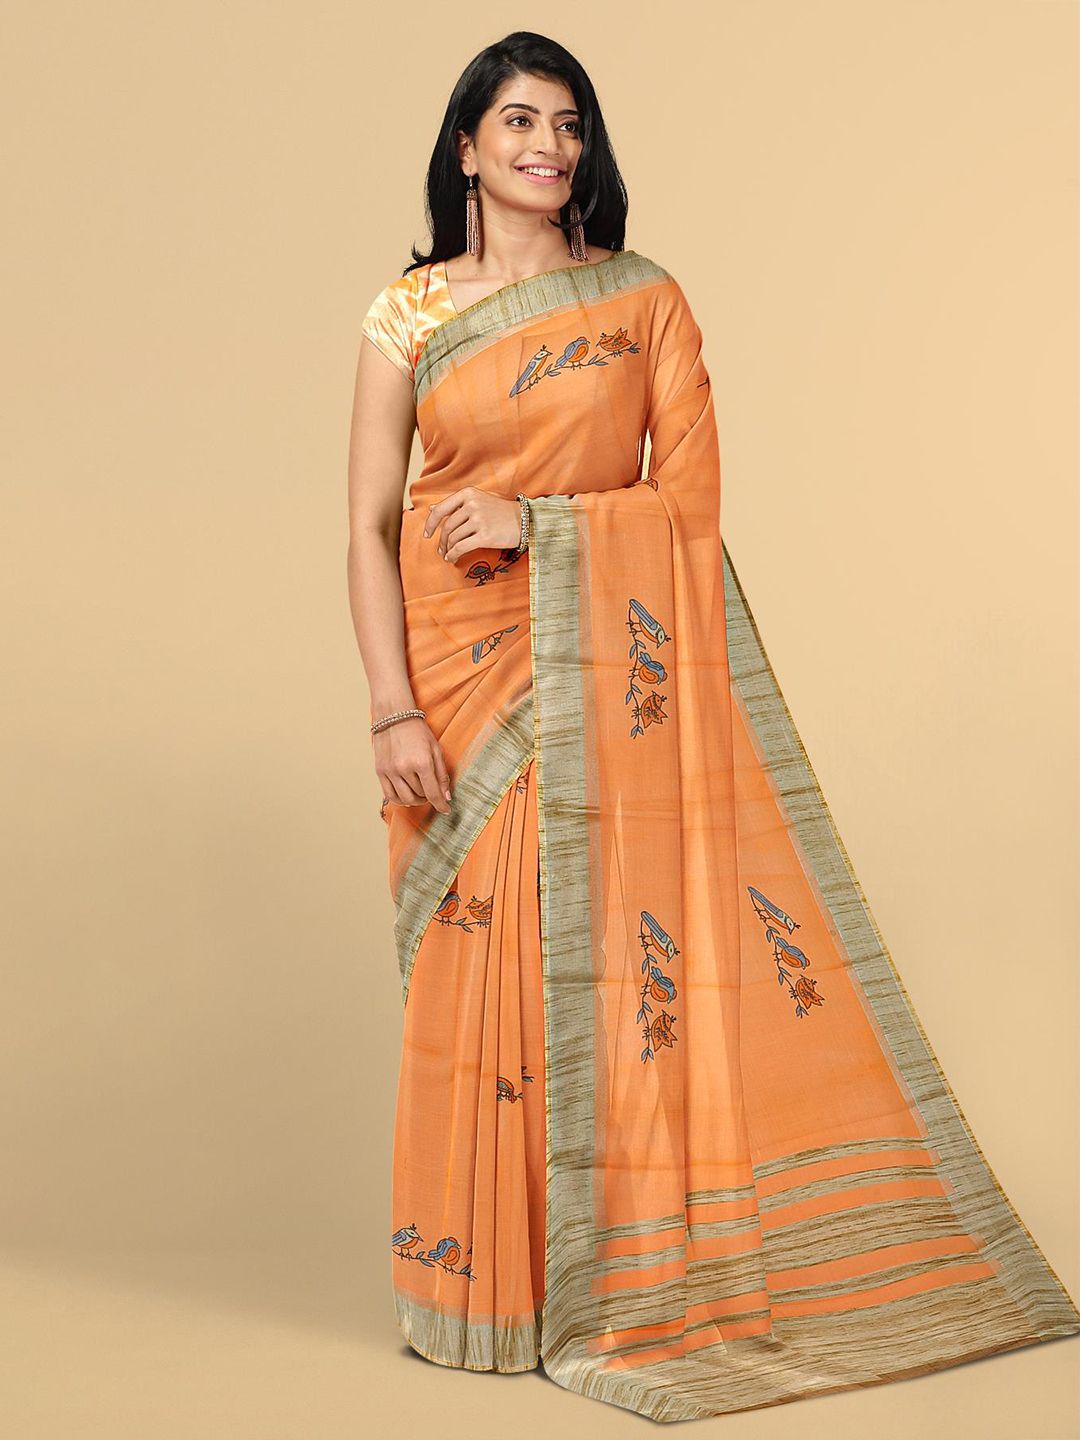 Kalamandir Orange & Green Ethnic Motifs Linen Blend Saree Price in India